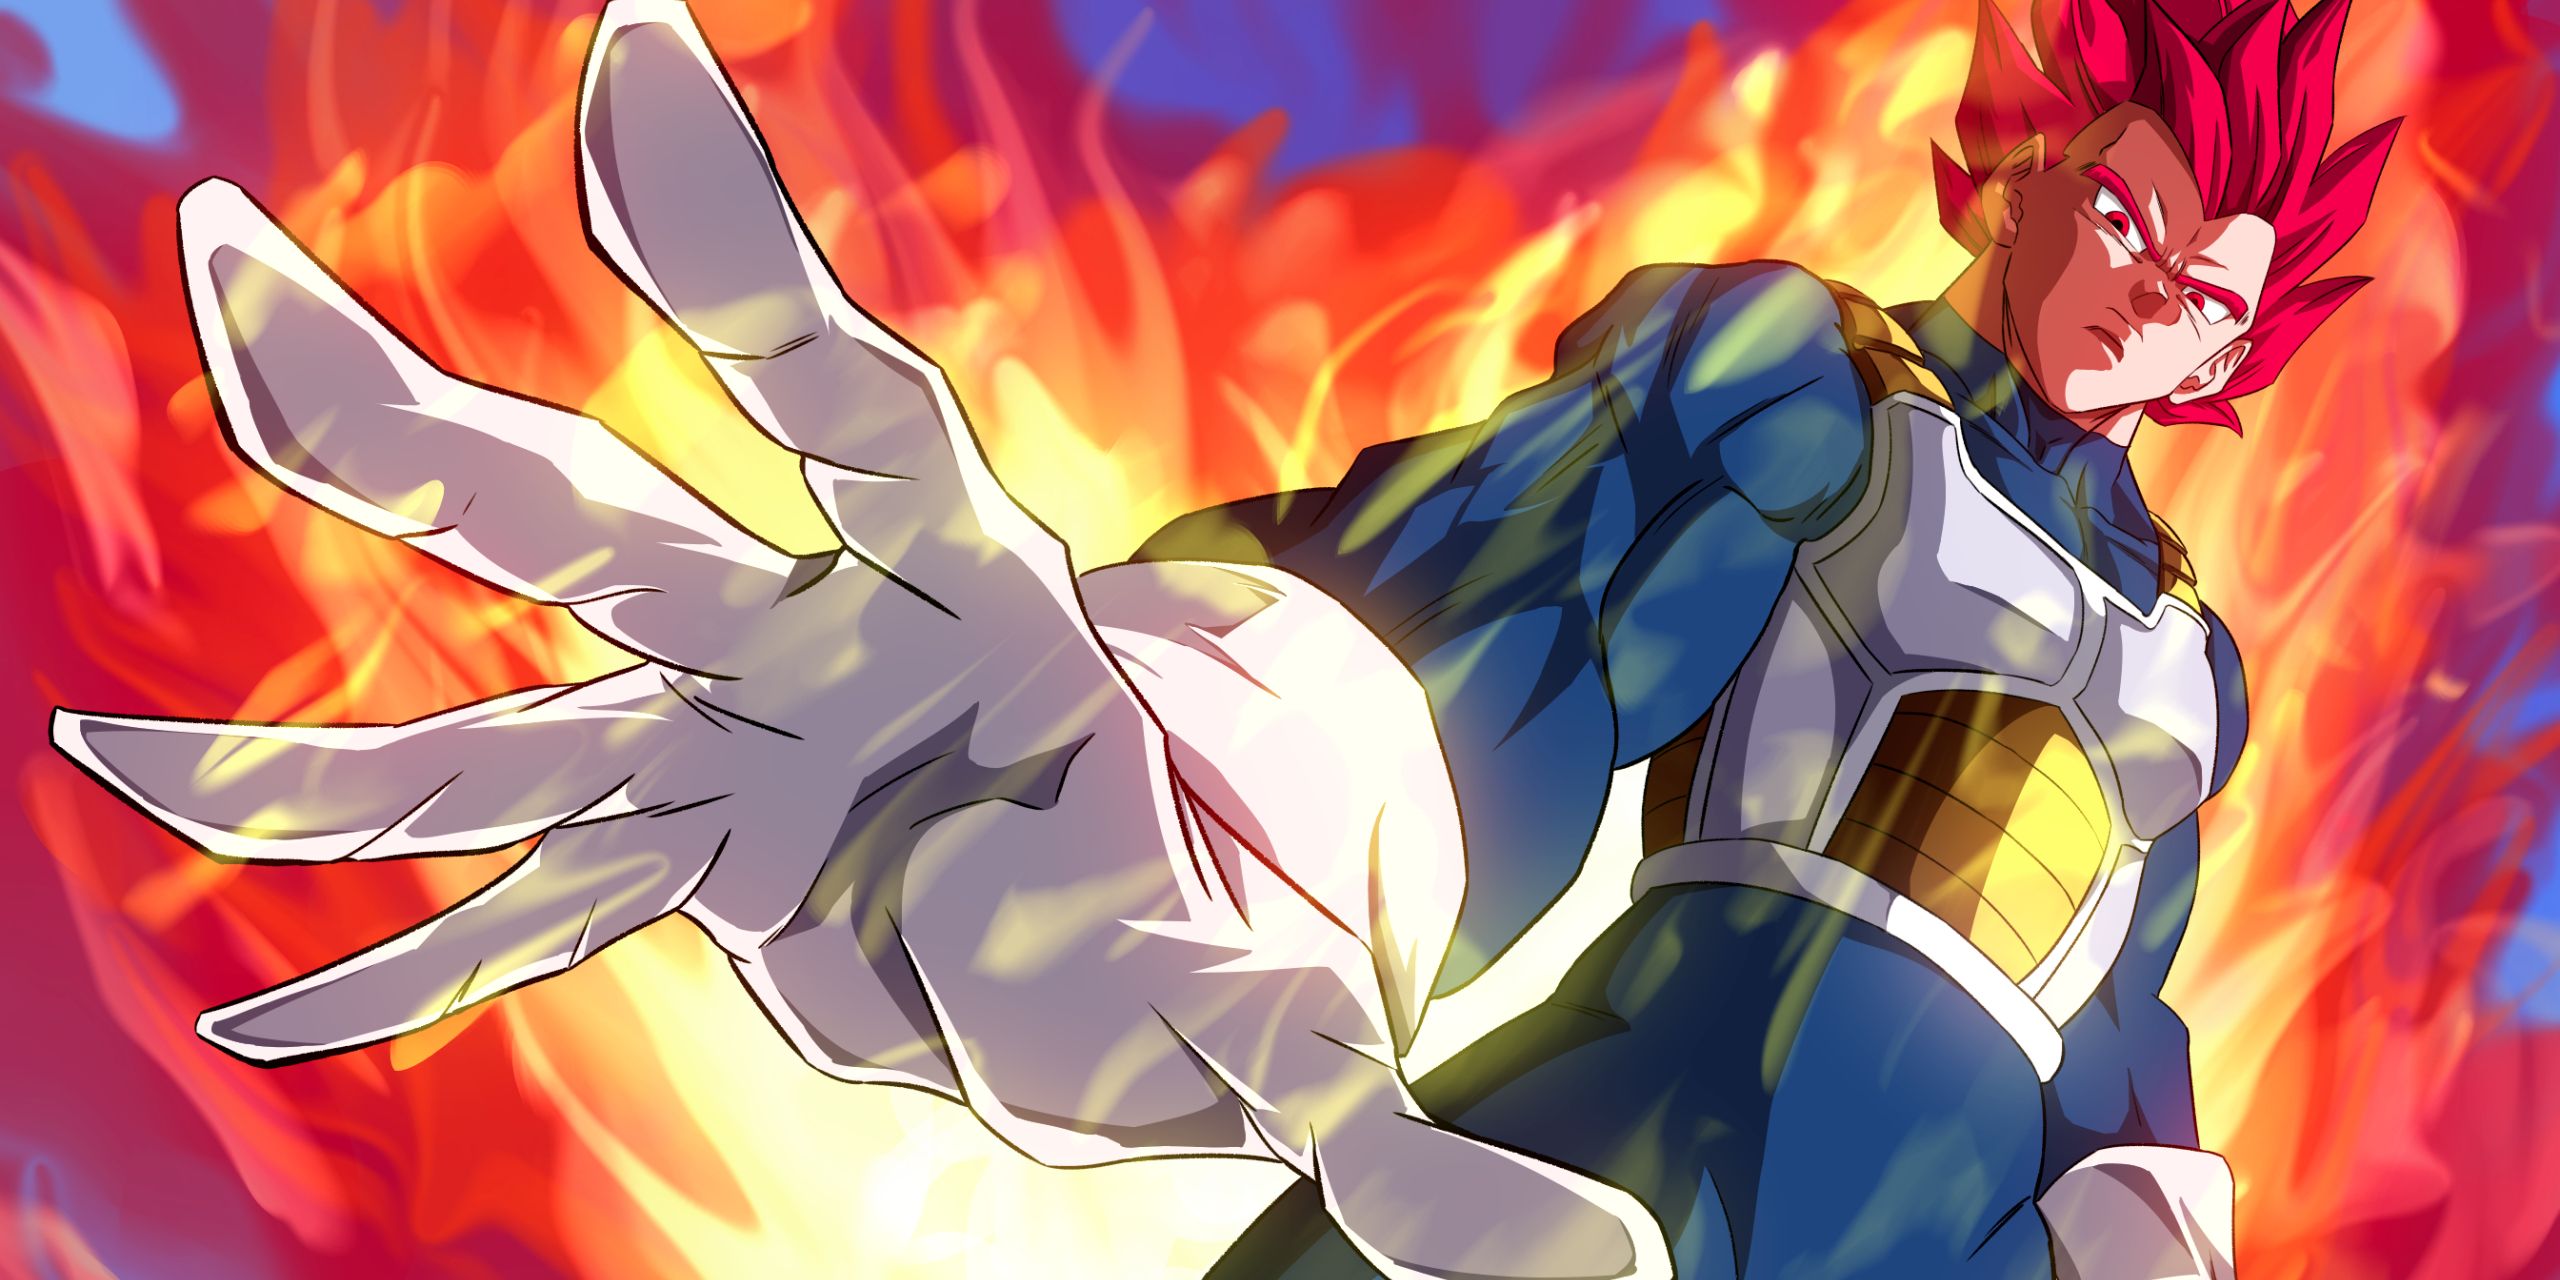 Super Saiyan God Vegeta delivers an energy blast in Dragon Ball Super: Broly